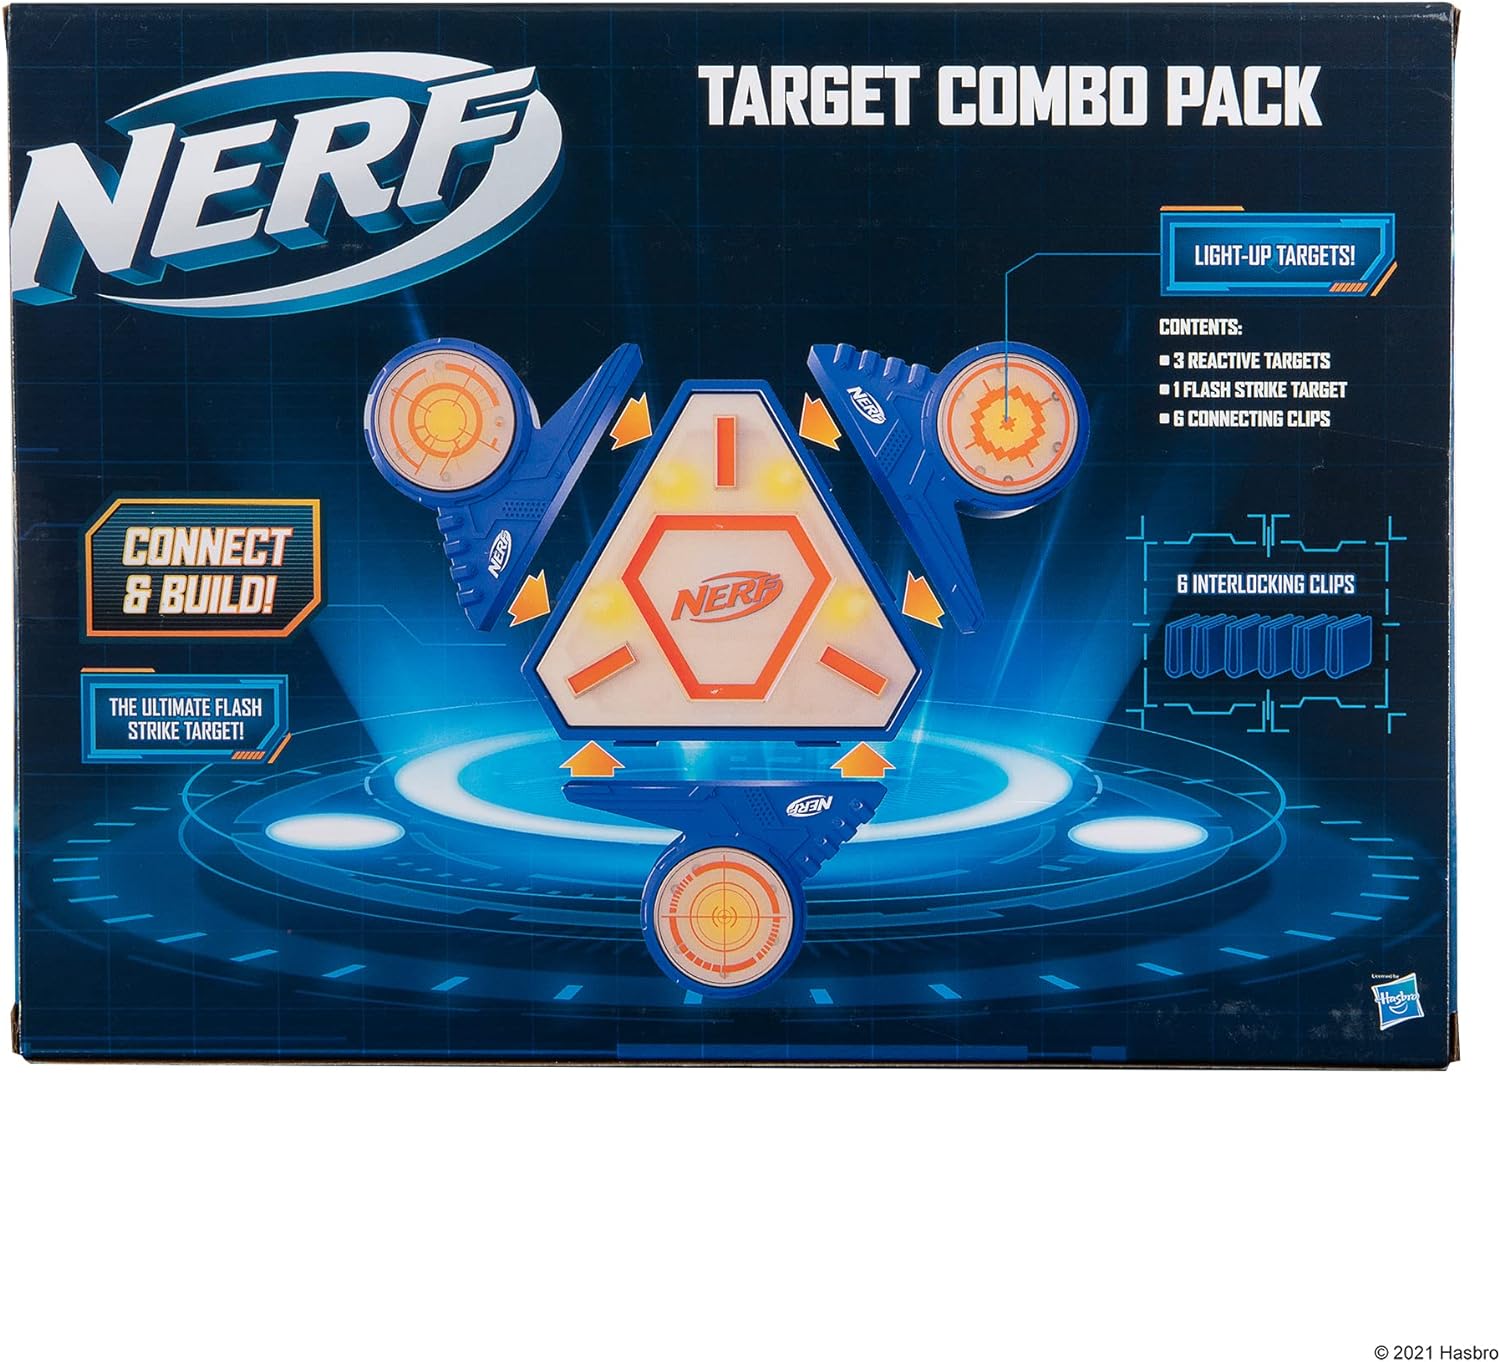 NERF Target Combo Pack, Flash Strike Target Base Plus 3 Reactive Targets - Targets Light Up When Hit  Expandable Modular Design; Customizable Target Design Single/Multiplayer - Amazon Exclusive